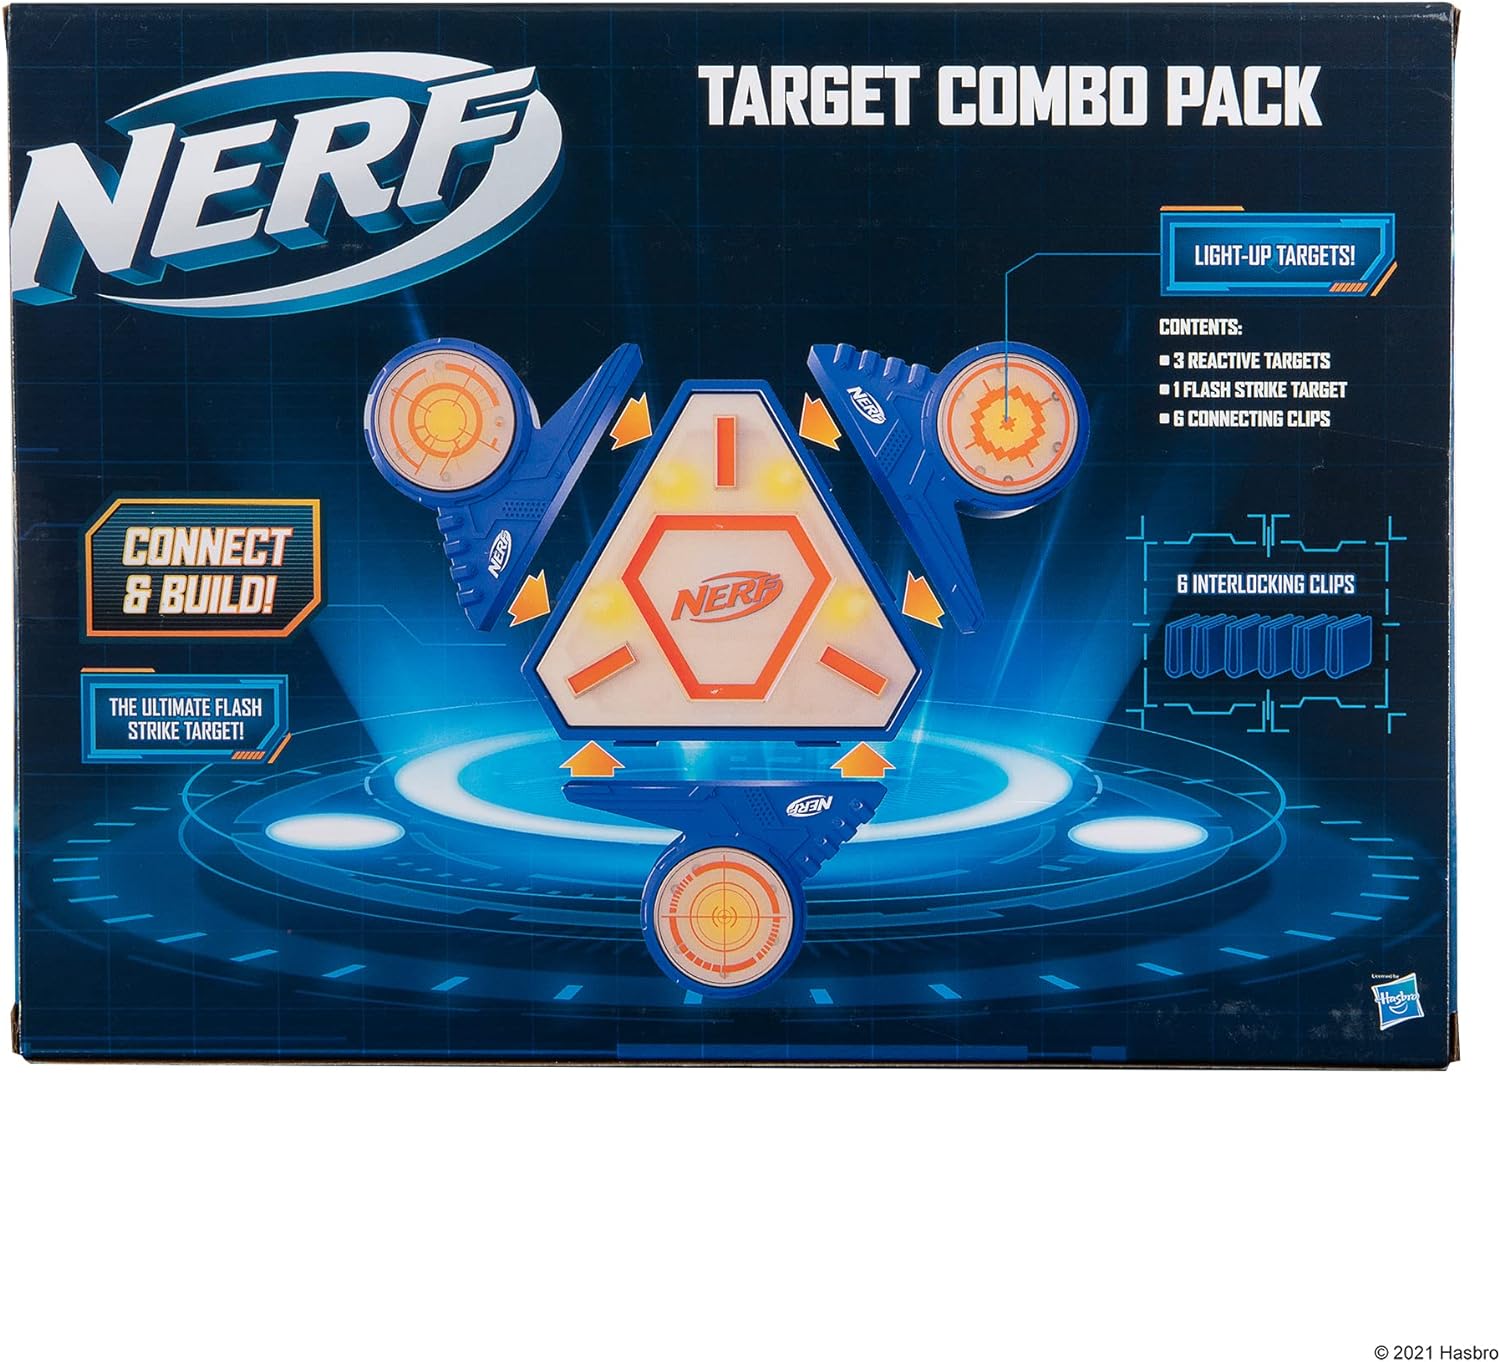 NERF Target Combo Pack, Flash Strike Target Base Plus 3 Reactive Targets - Targets Light Up When Hit  Expandable Modular Design; Customizable Target Design Single/Multiplayer - Amazon Exclusive